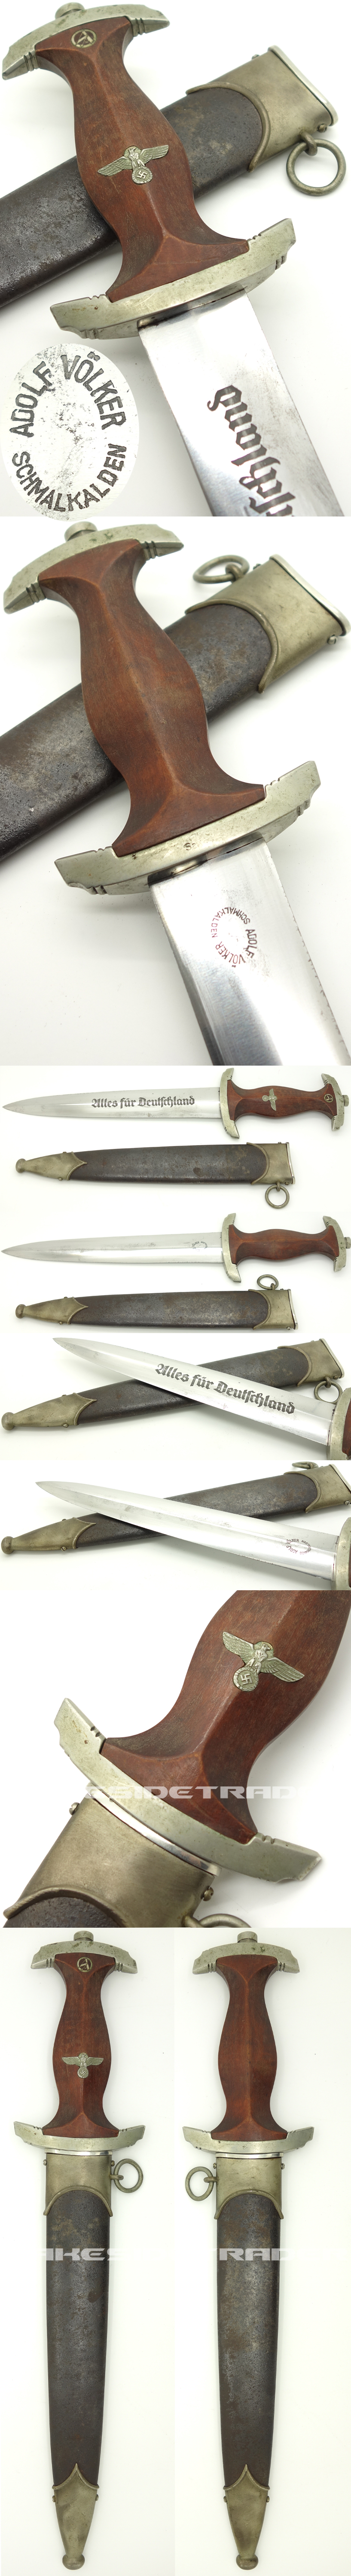 Early NSKK Dagger variation by Adolf Völker